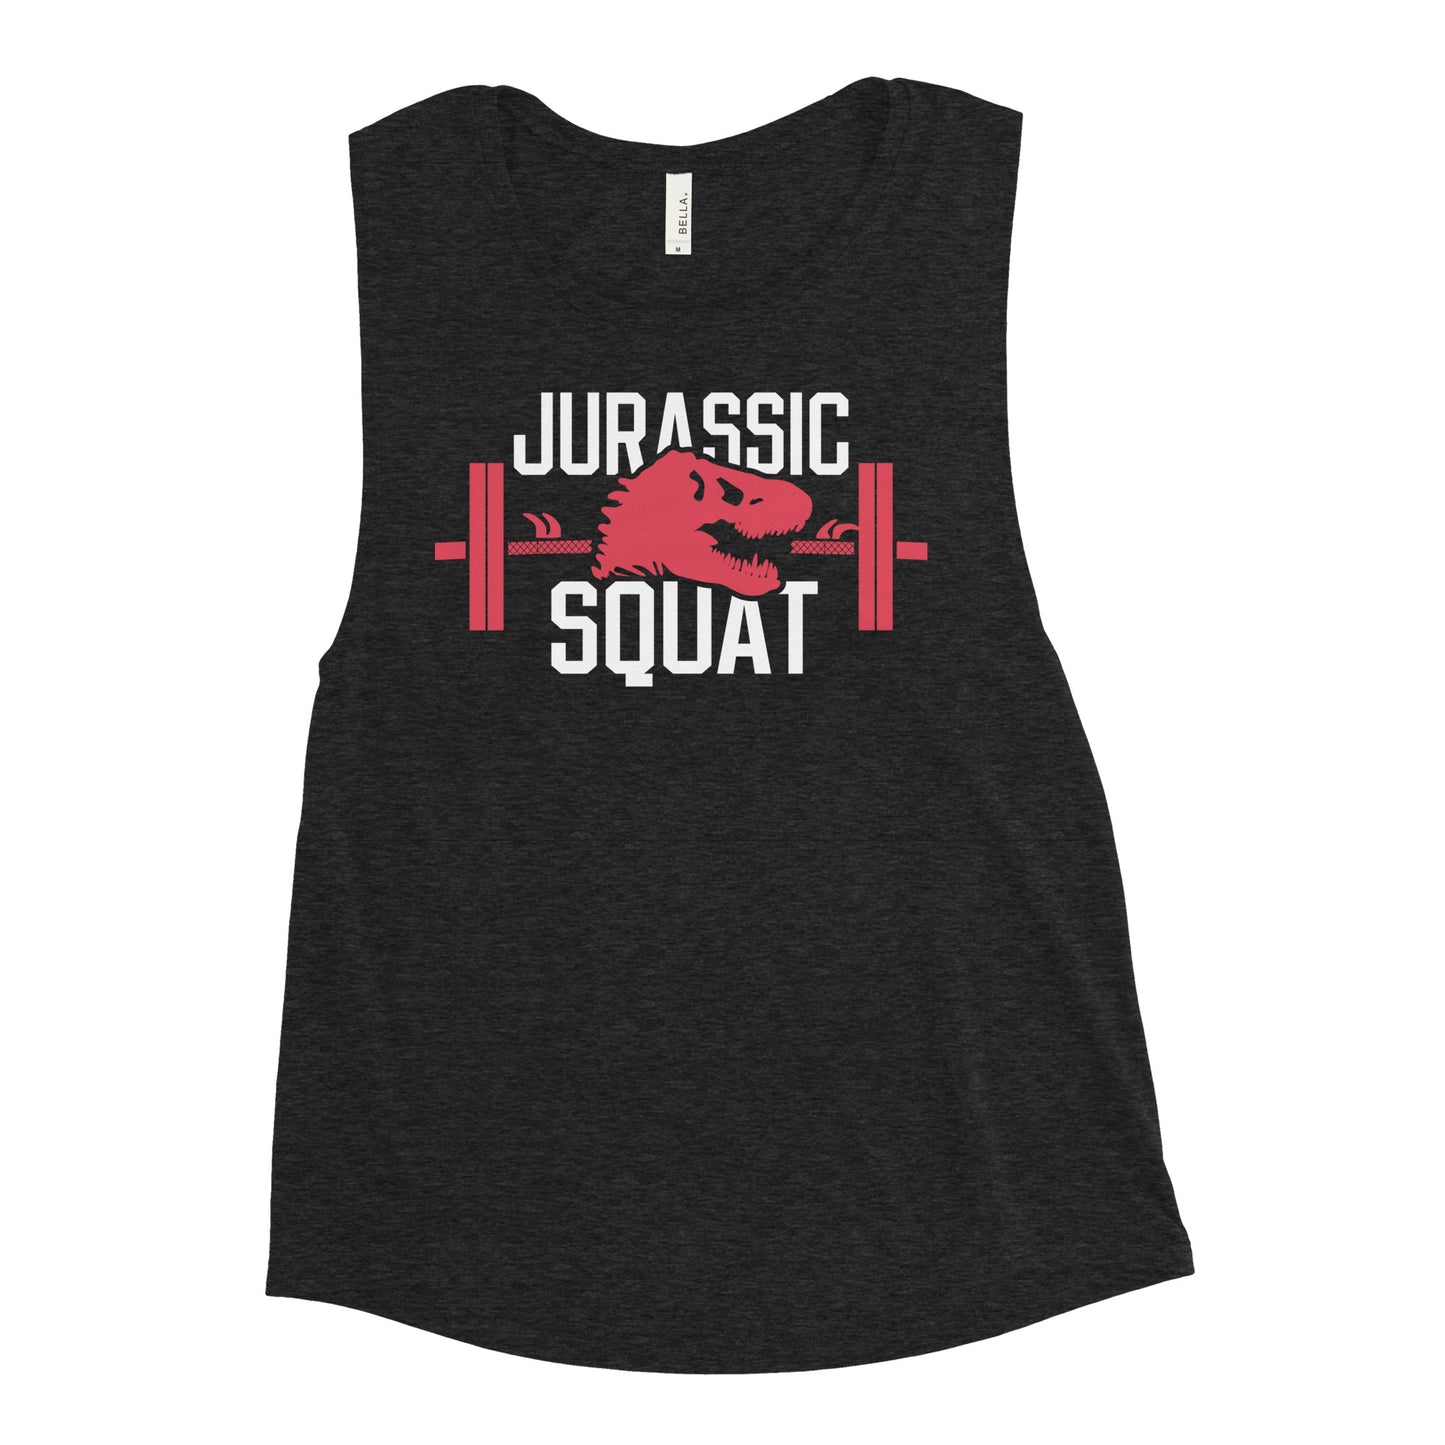 Jurassic Squat Women's Muscle Tank